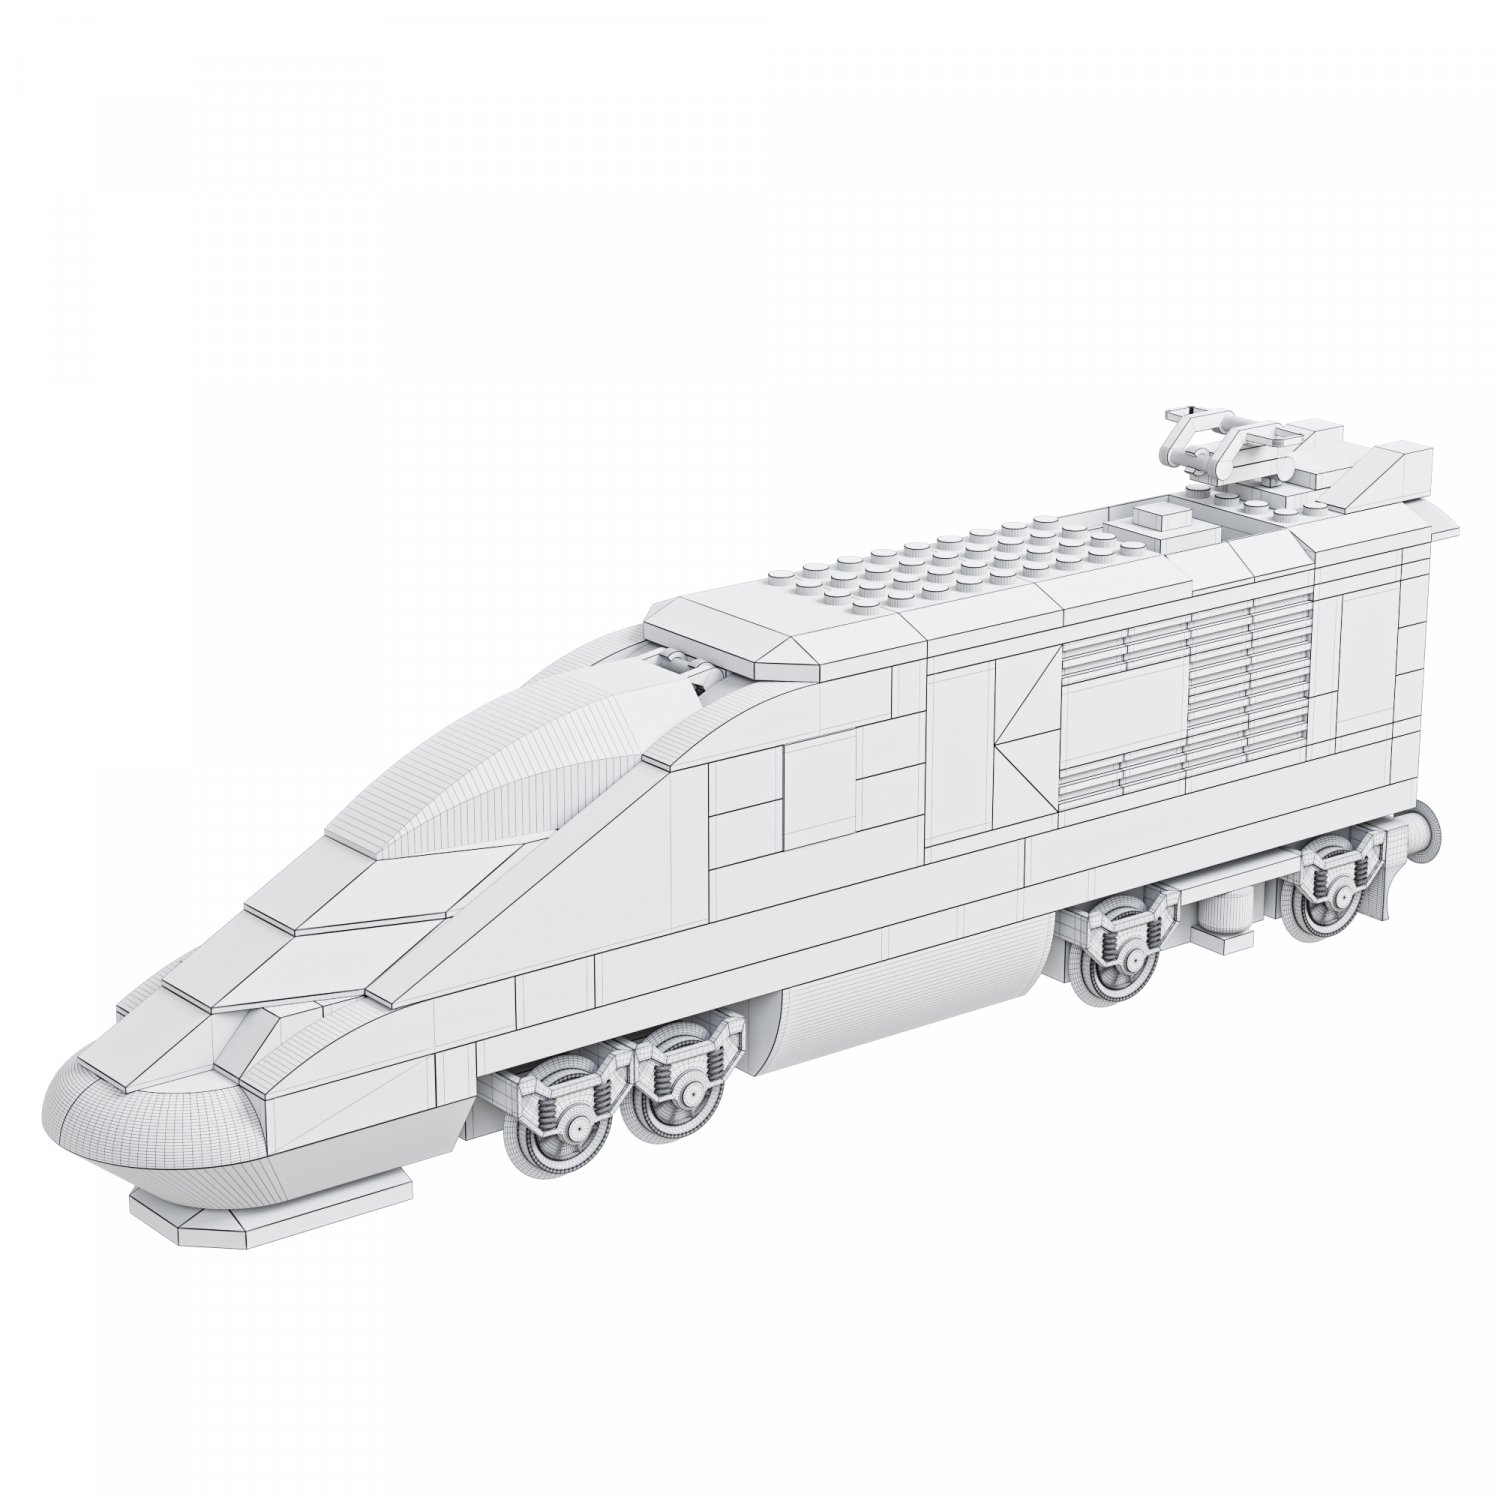 LEGO TGV construction details of custom high speed train model 